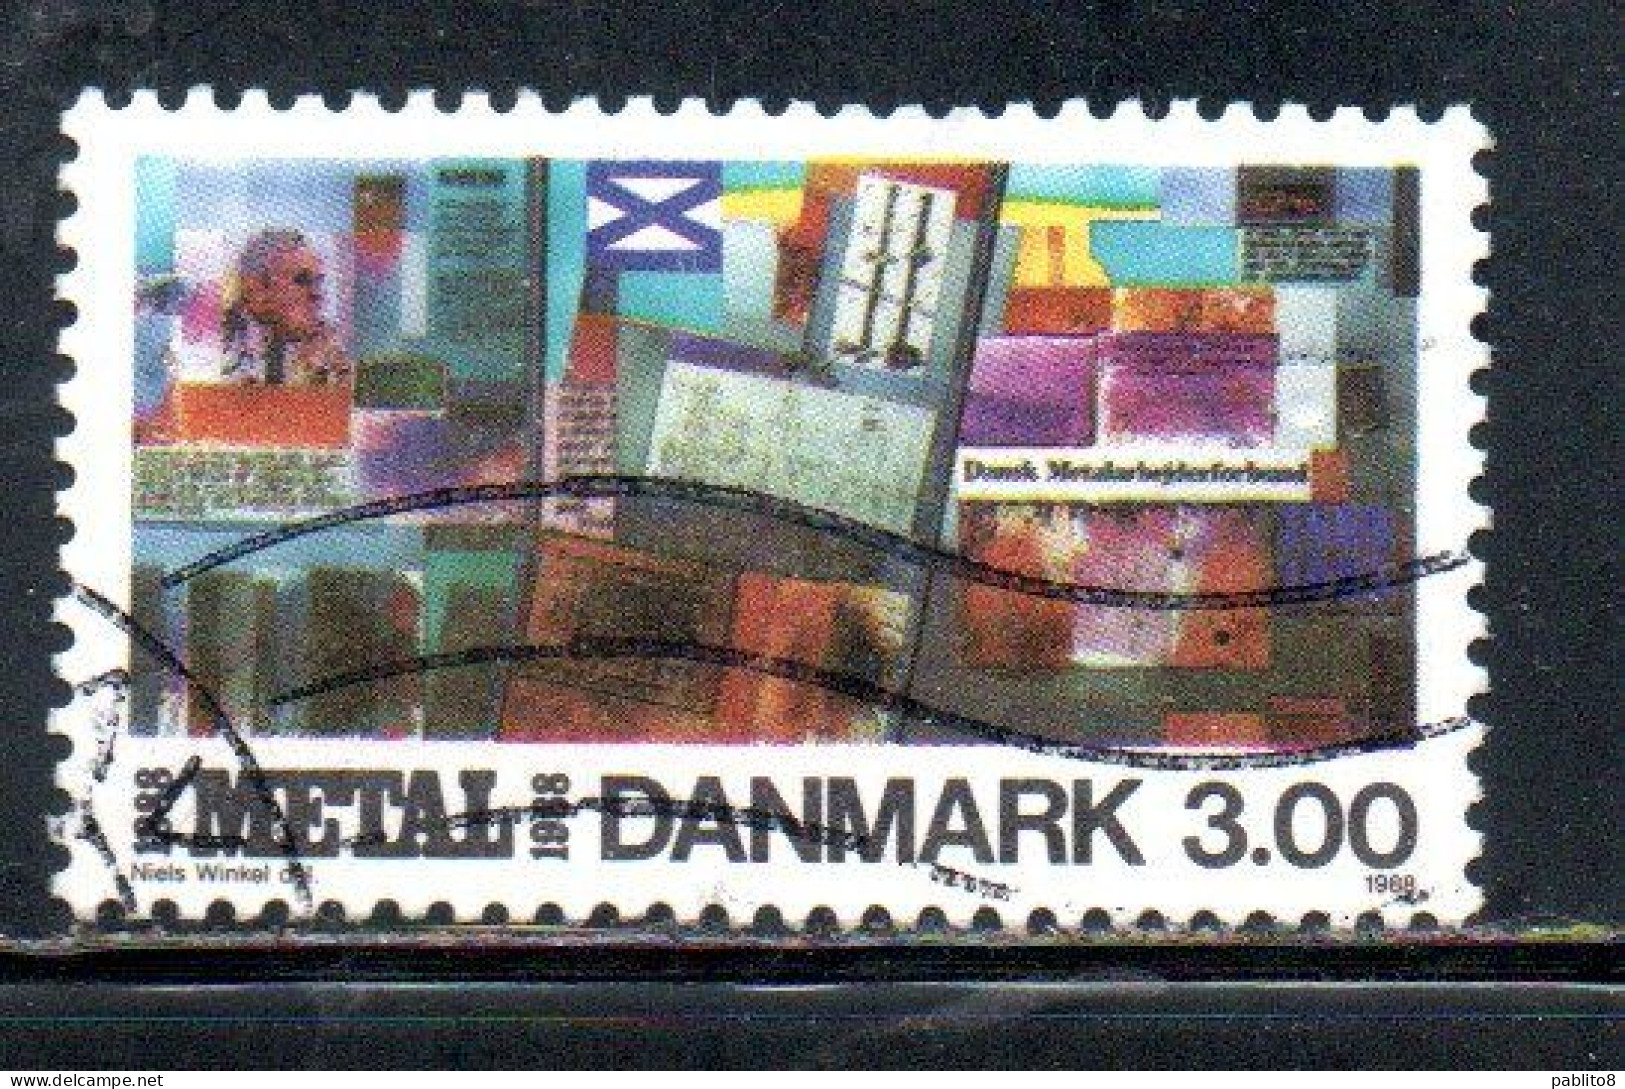 DANEMARK DANMARK DENMARK DANIMARCA 1988 DANISH METALWORKERS' UNION CENTENARY GLASS MOSAIC 3k USED USATO OBLITERE' - Oblitérés